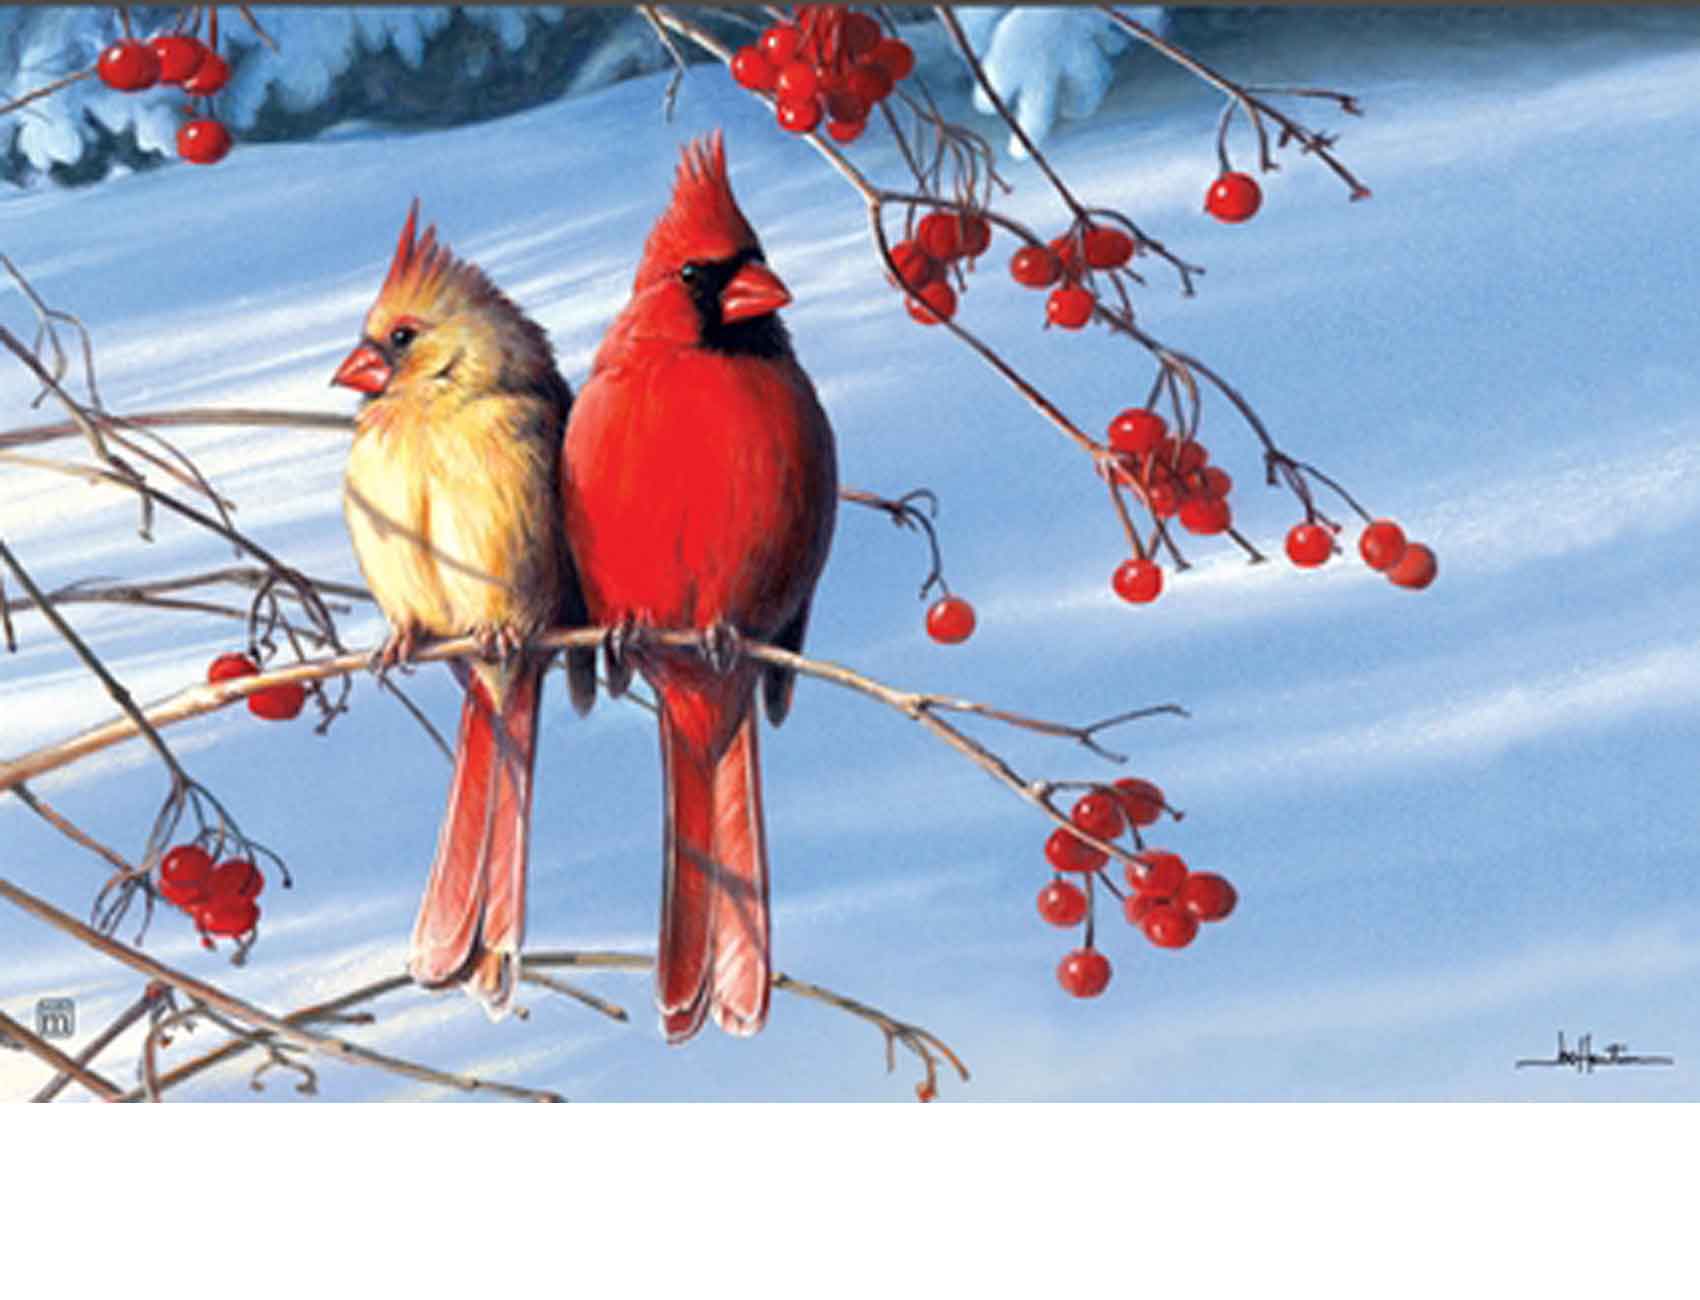 https://www.everythingdoormats.com/images/products/cardinals-in-snow-matmates-insert-doormat-18x30-13133mw.jpg